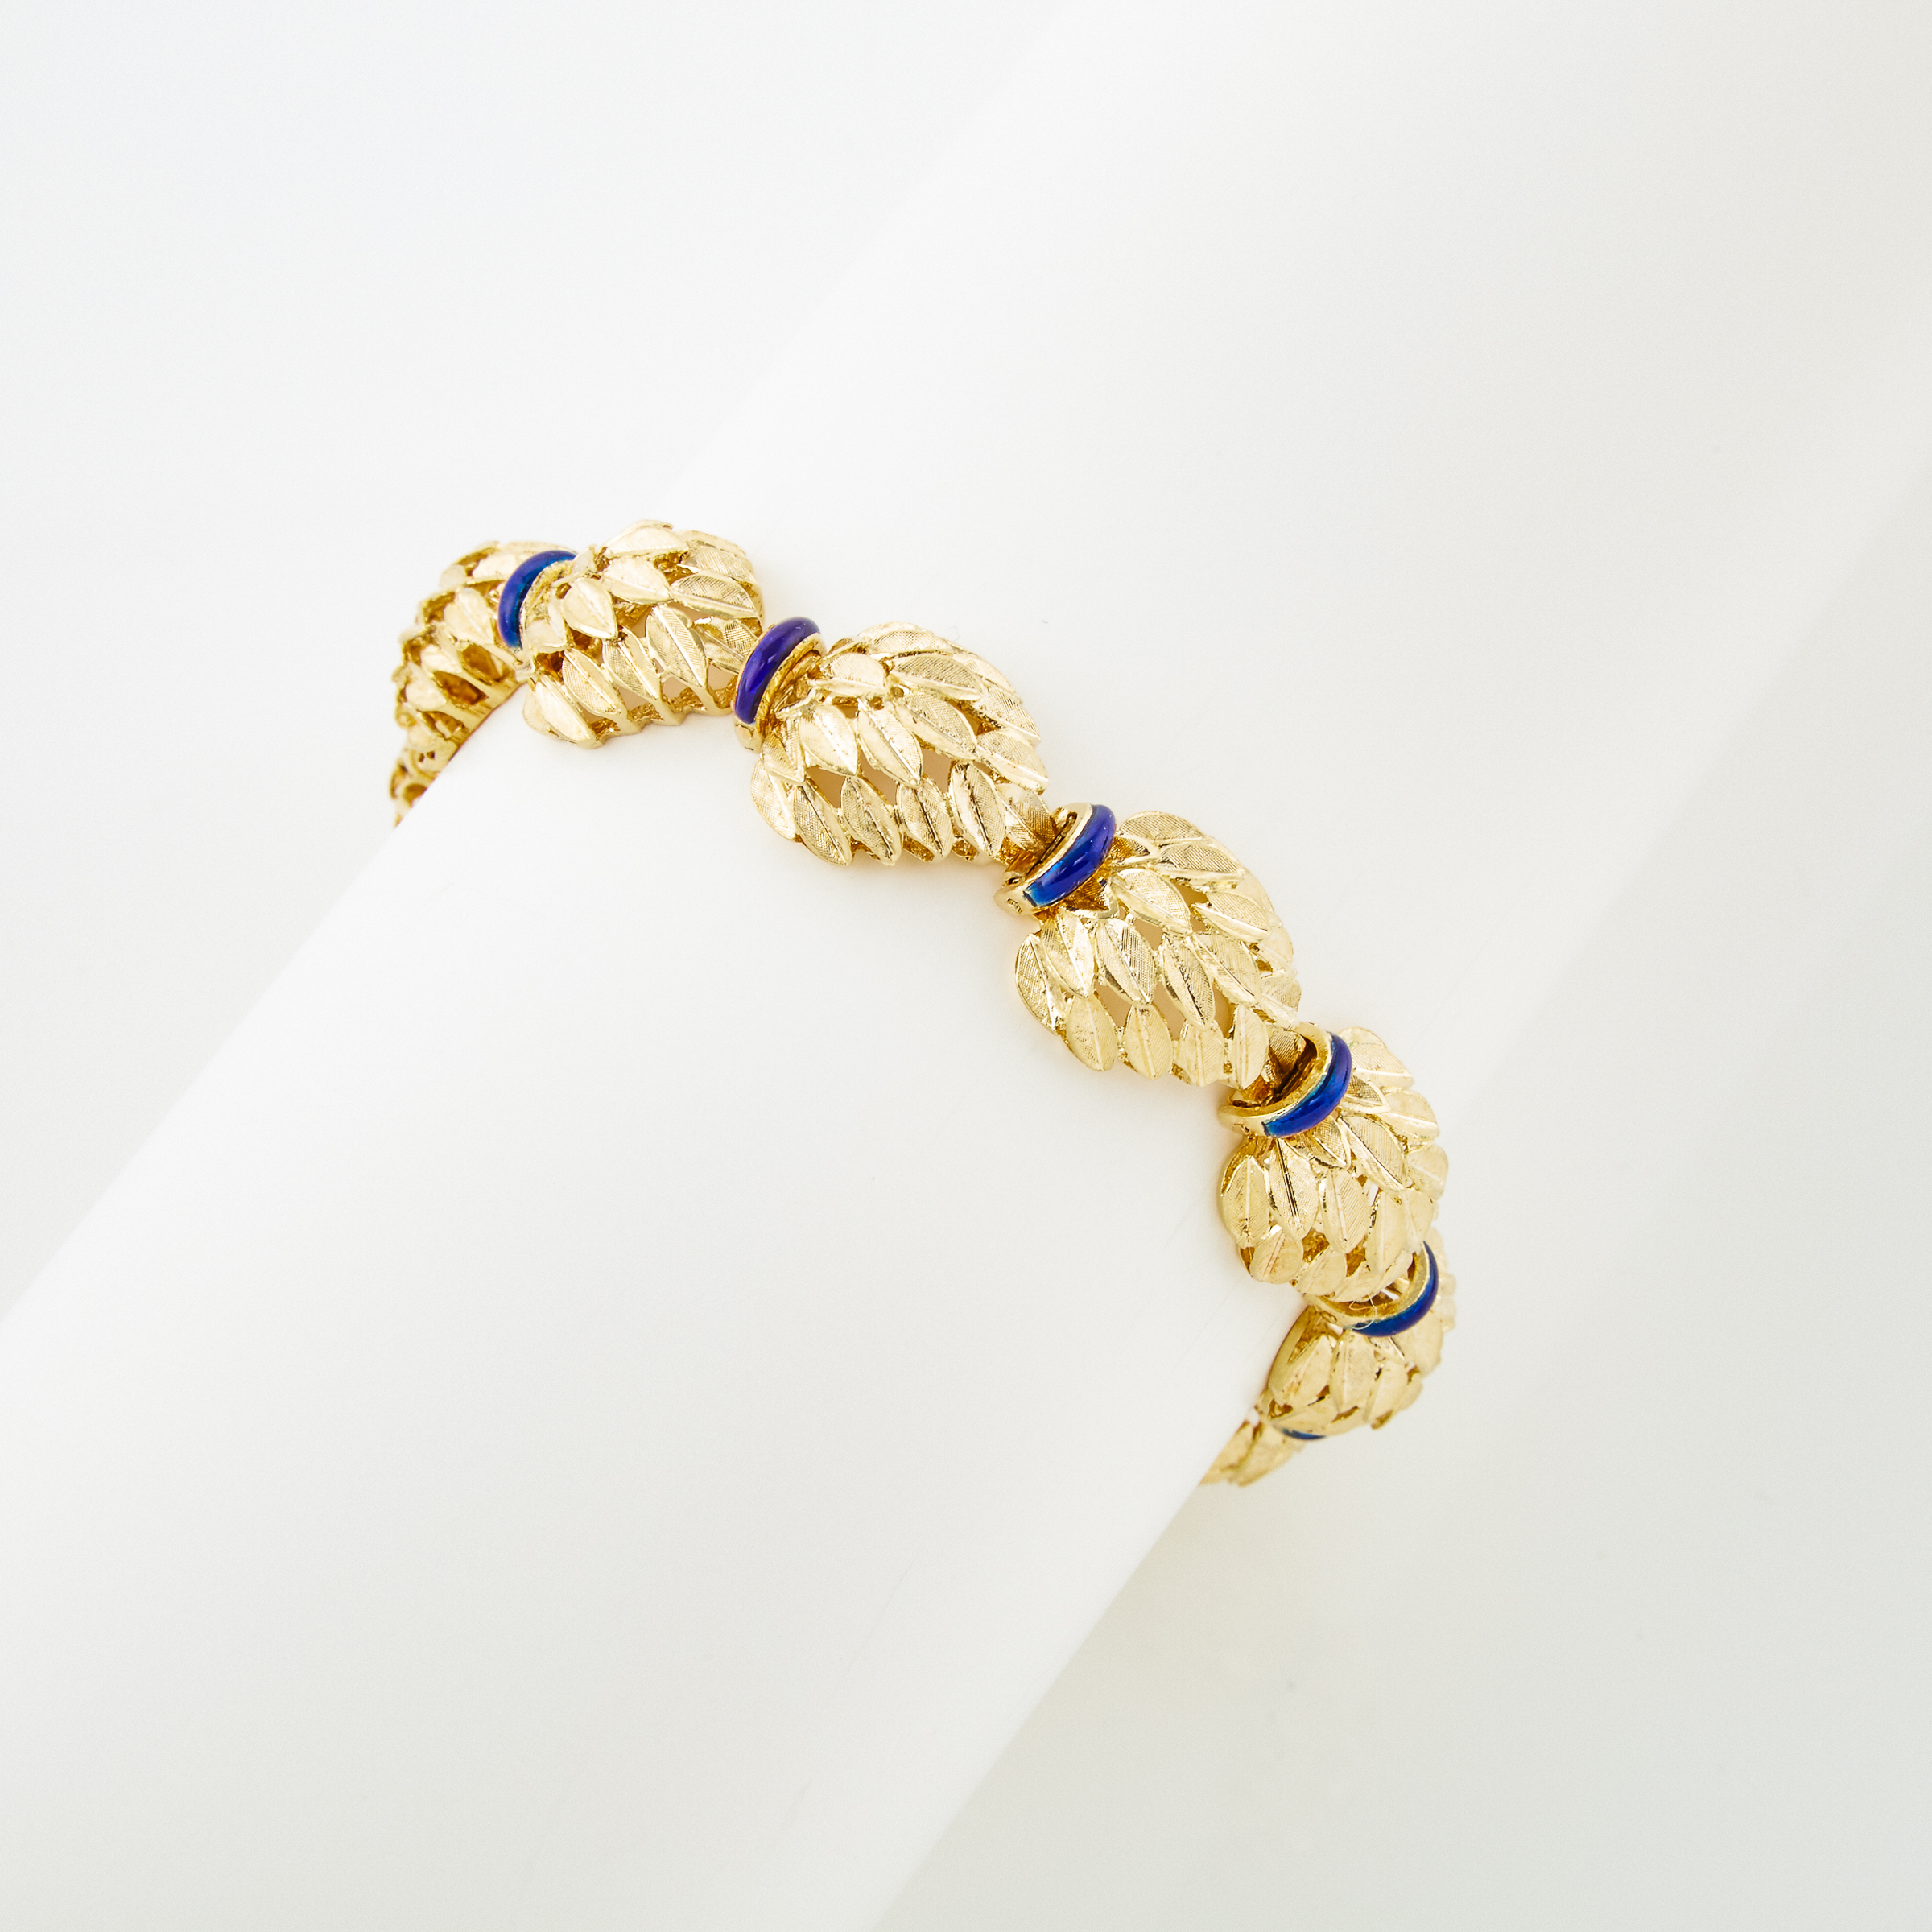 18k Yellow Gold Link Bracelet